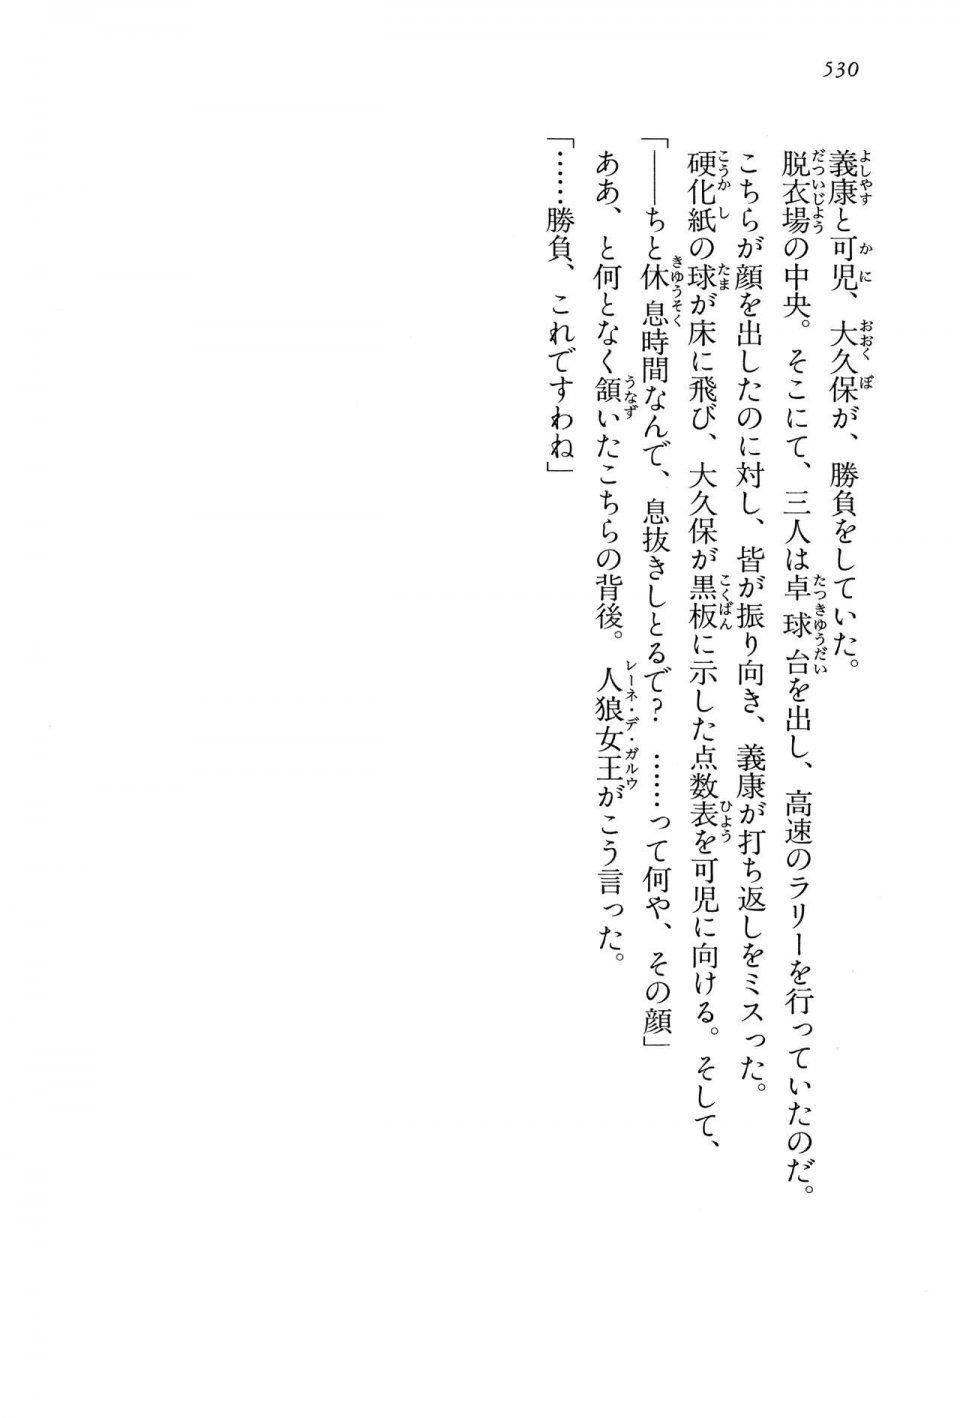 Kyoukai Senjou no Horizon LN Vol 15(6C) Part 1 - Photo #530